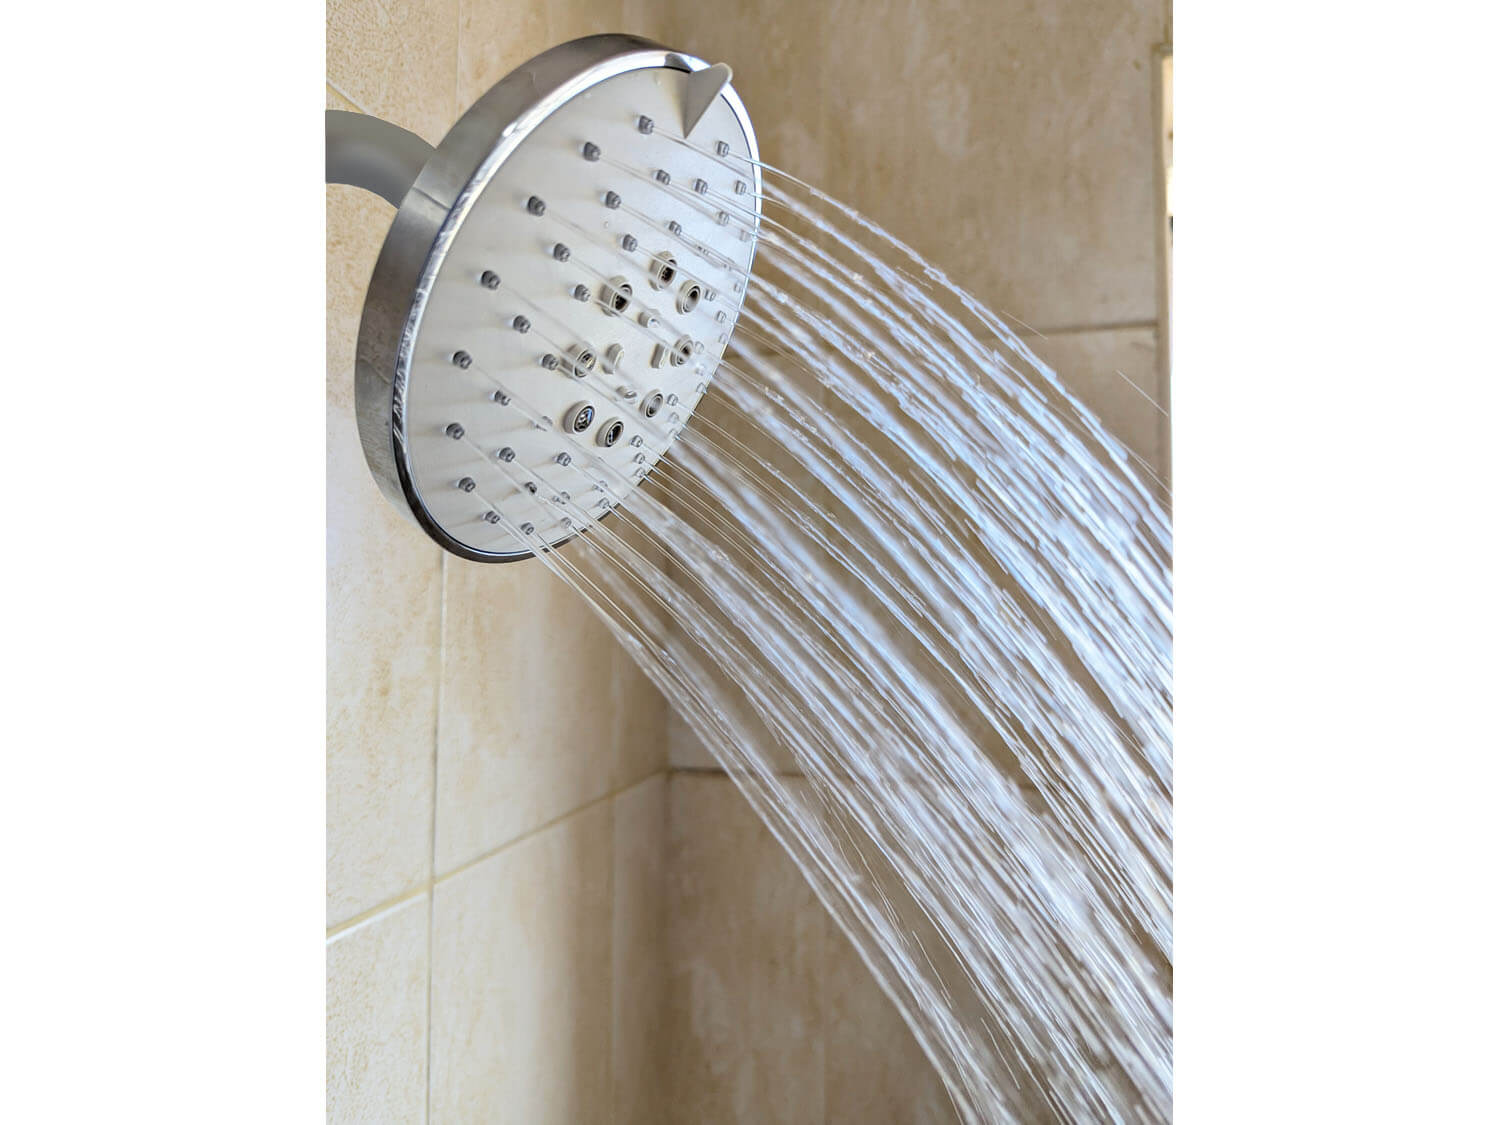 Tivoli Round 130mm Shower Head with water